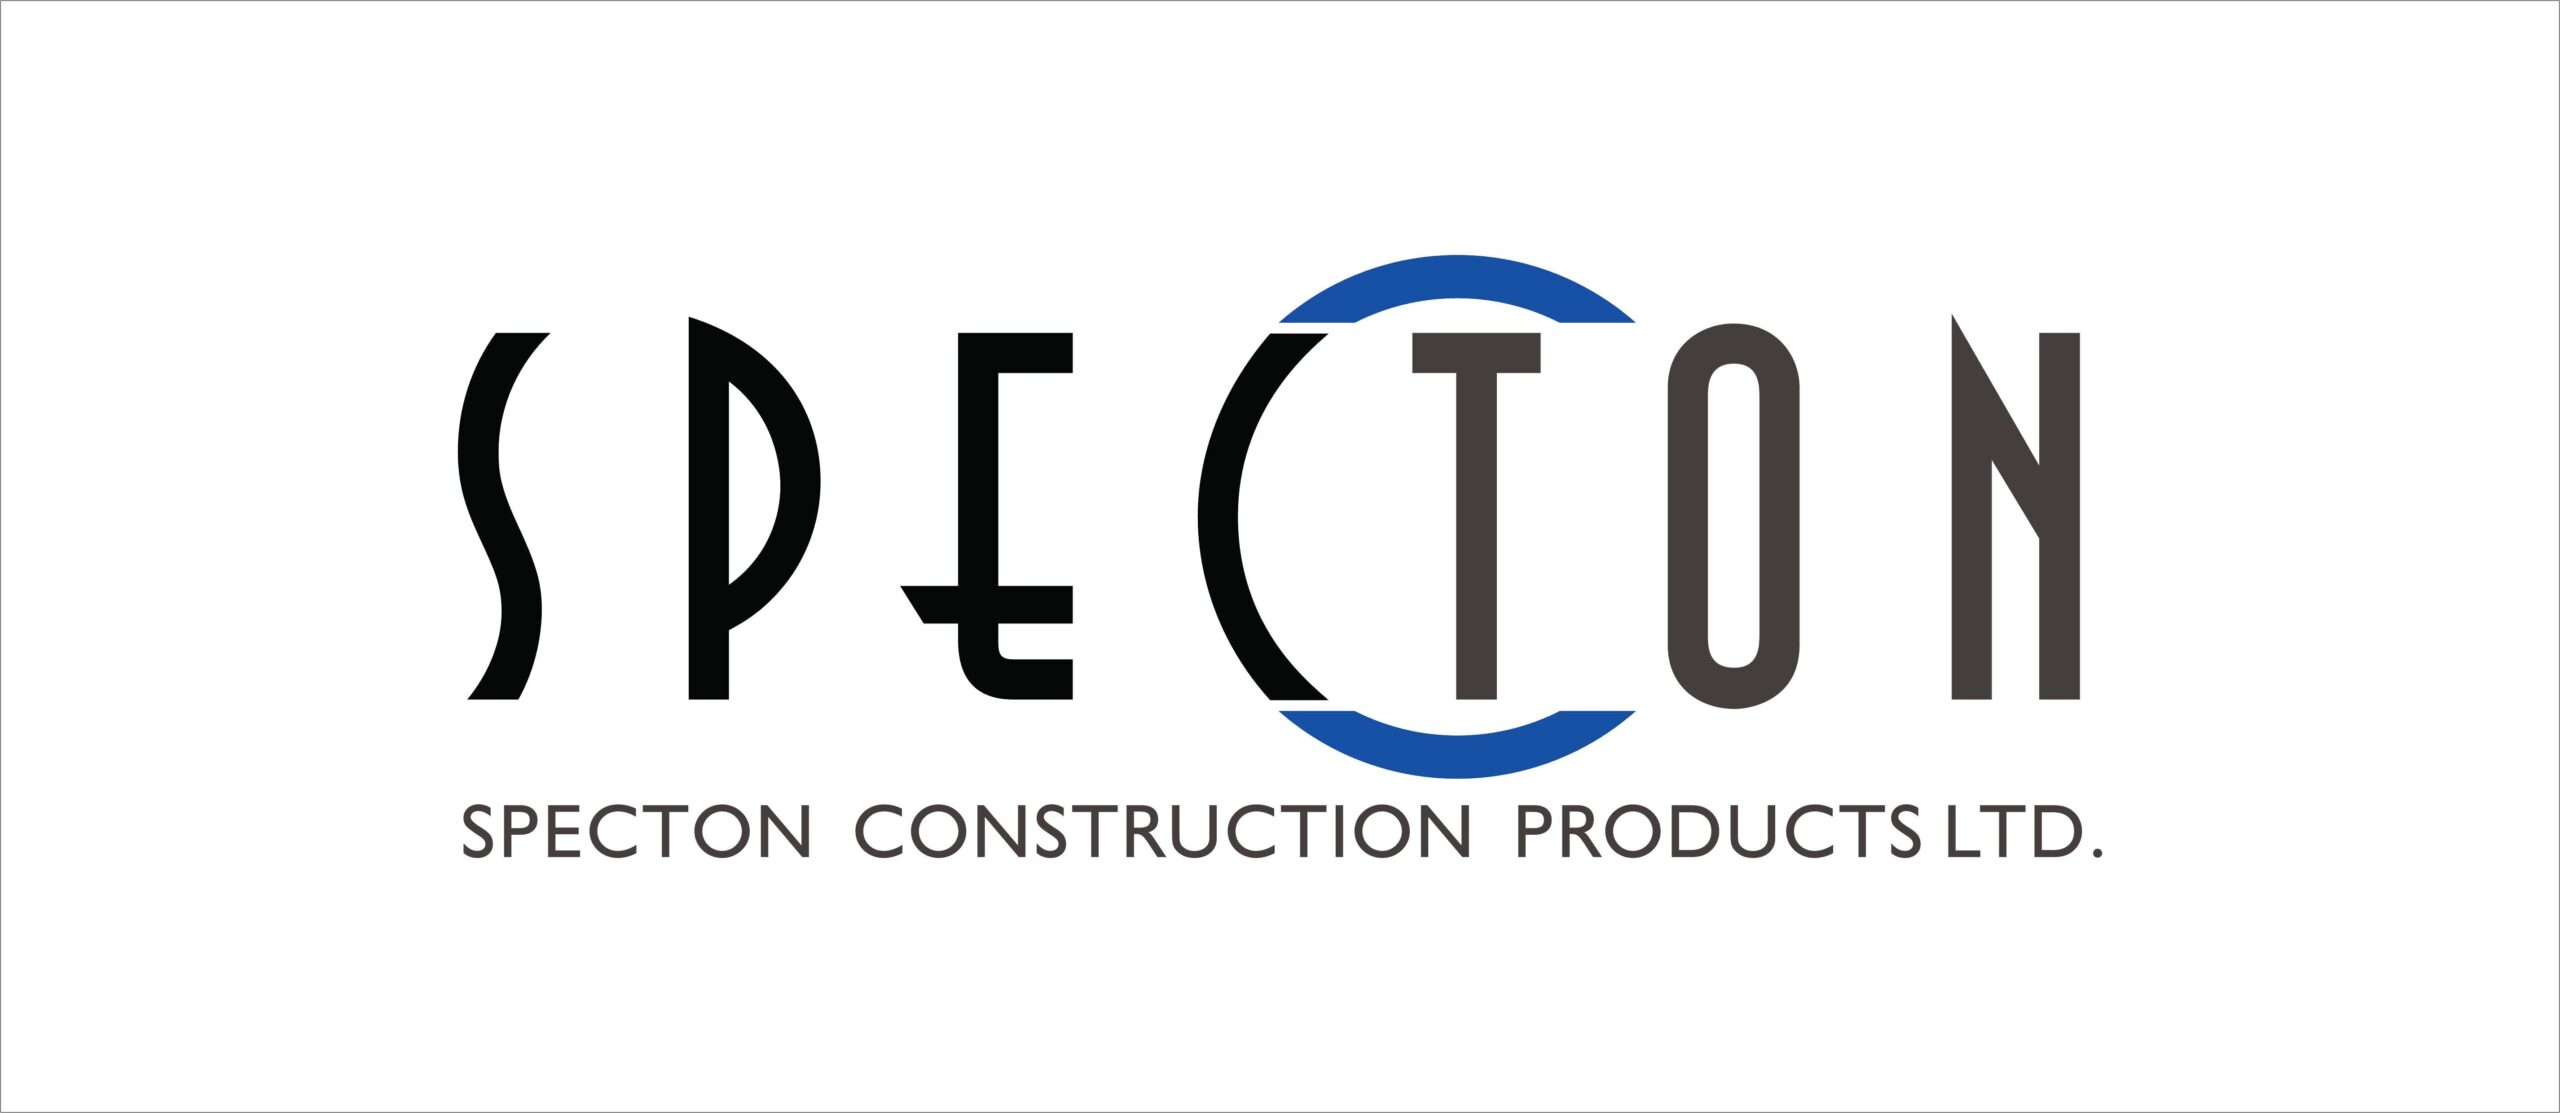 Specton Construction Products LTD.